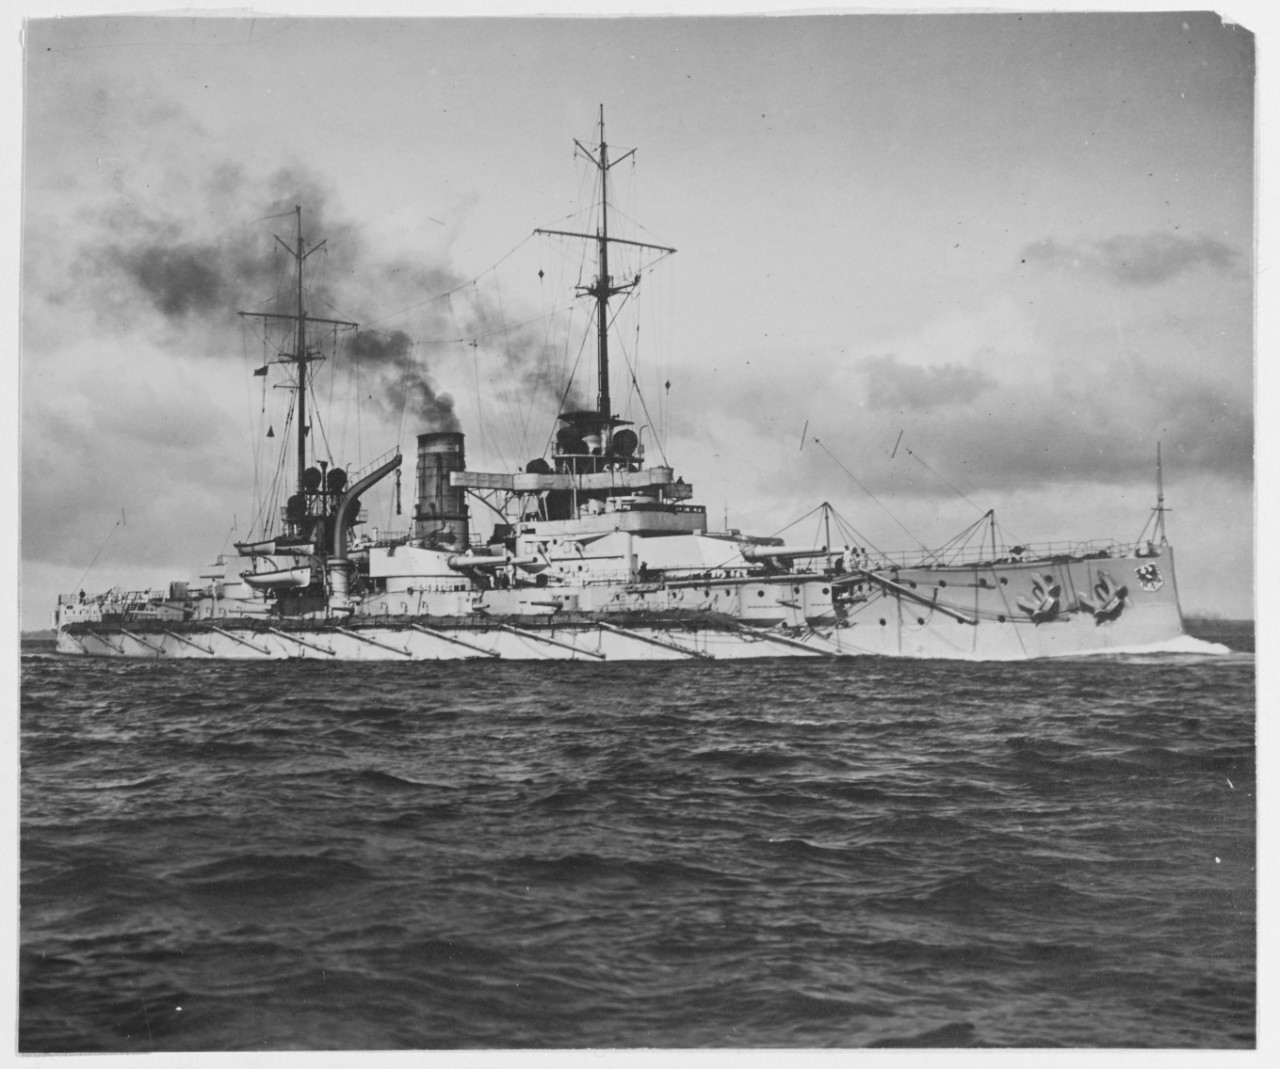 RHEINLAND (German battleship, 1908-1921)